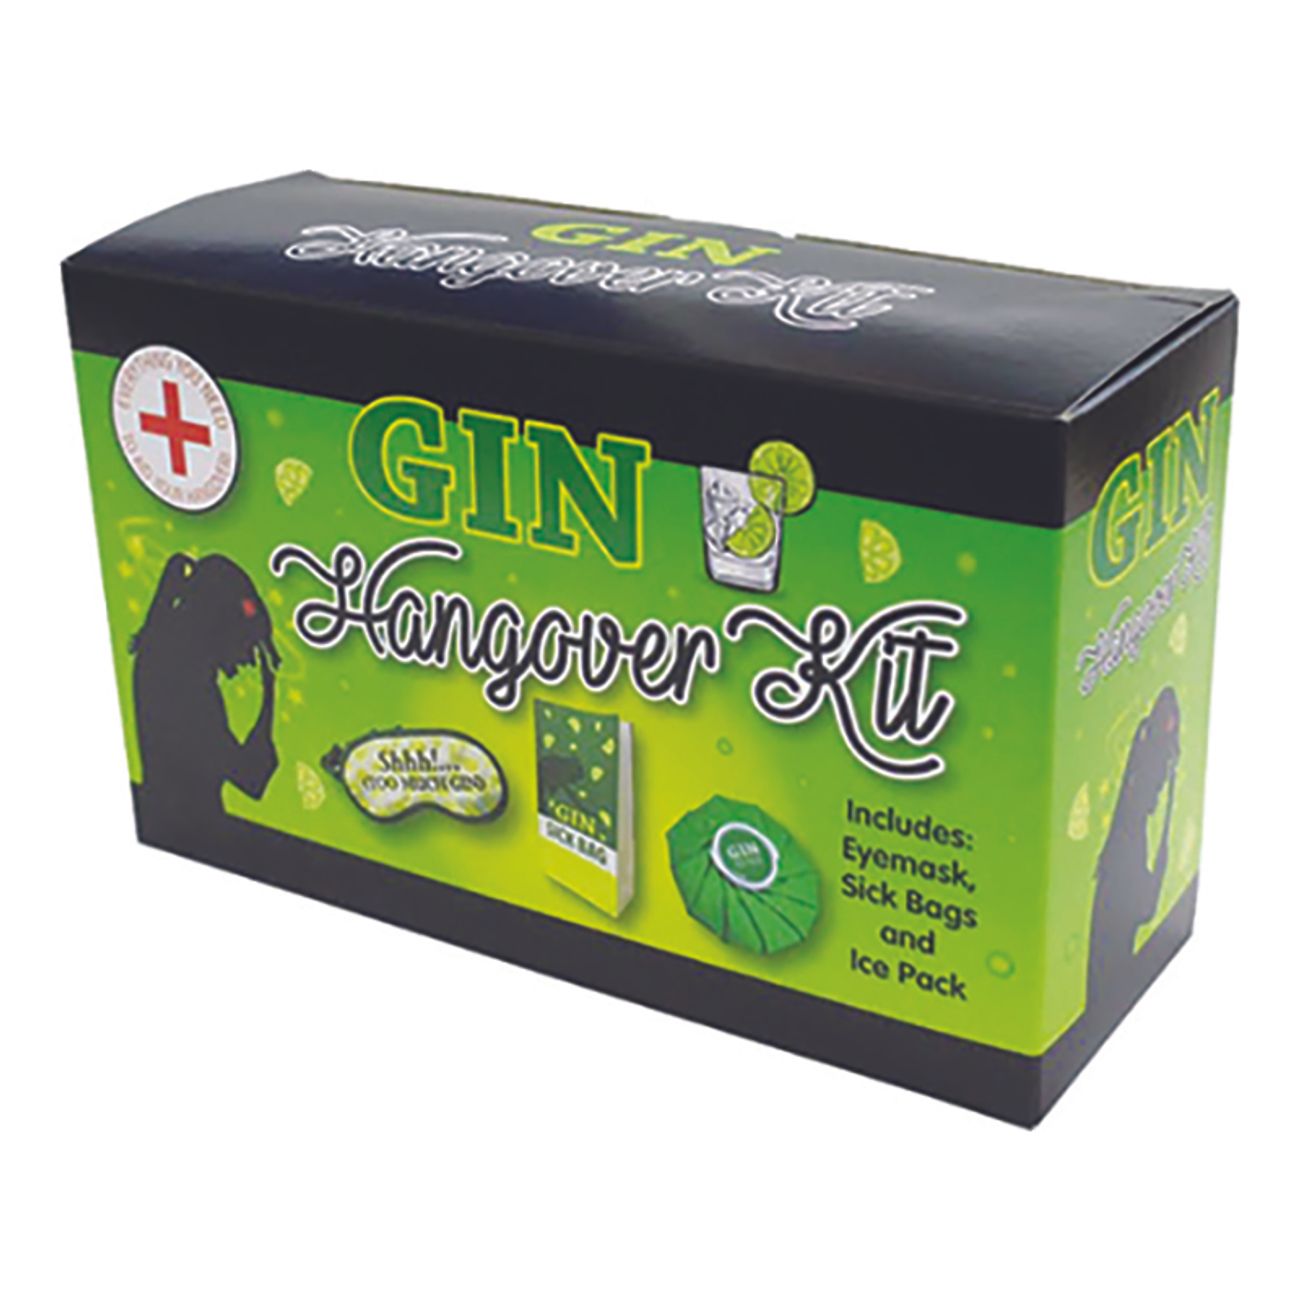 gin-hangover-kit-1